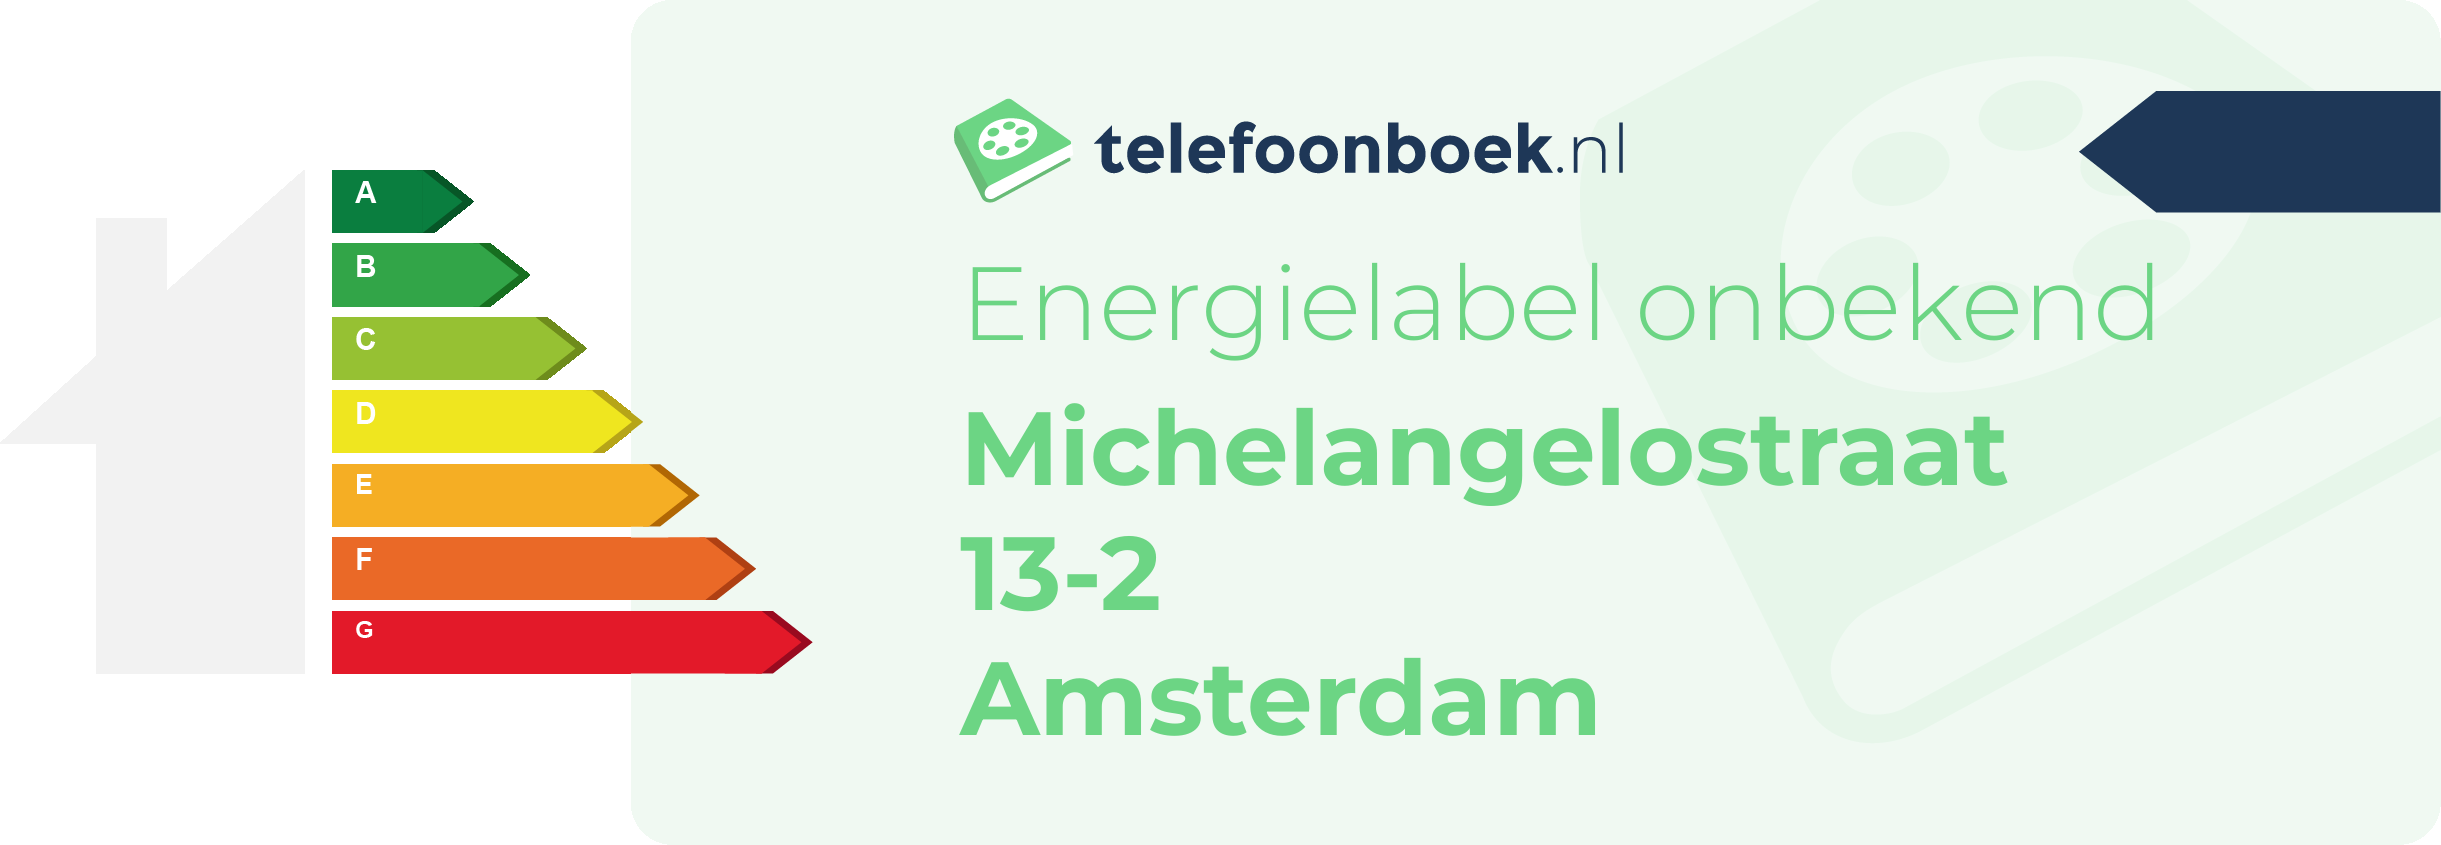 Energielabel Michelangelostraat 13-2 Amsterdam